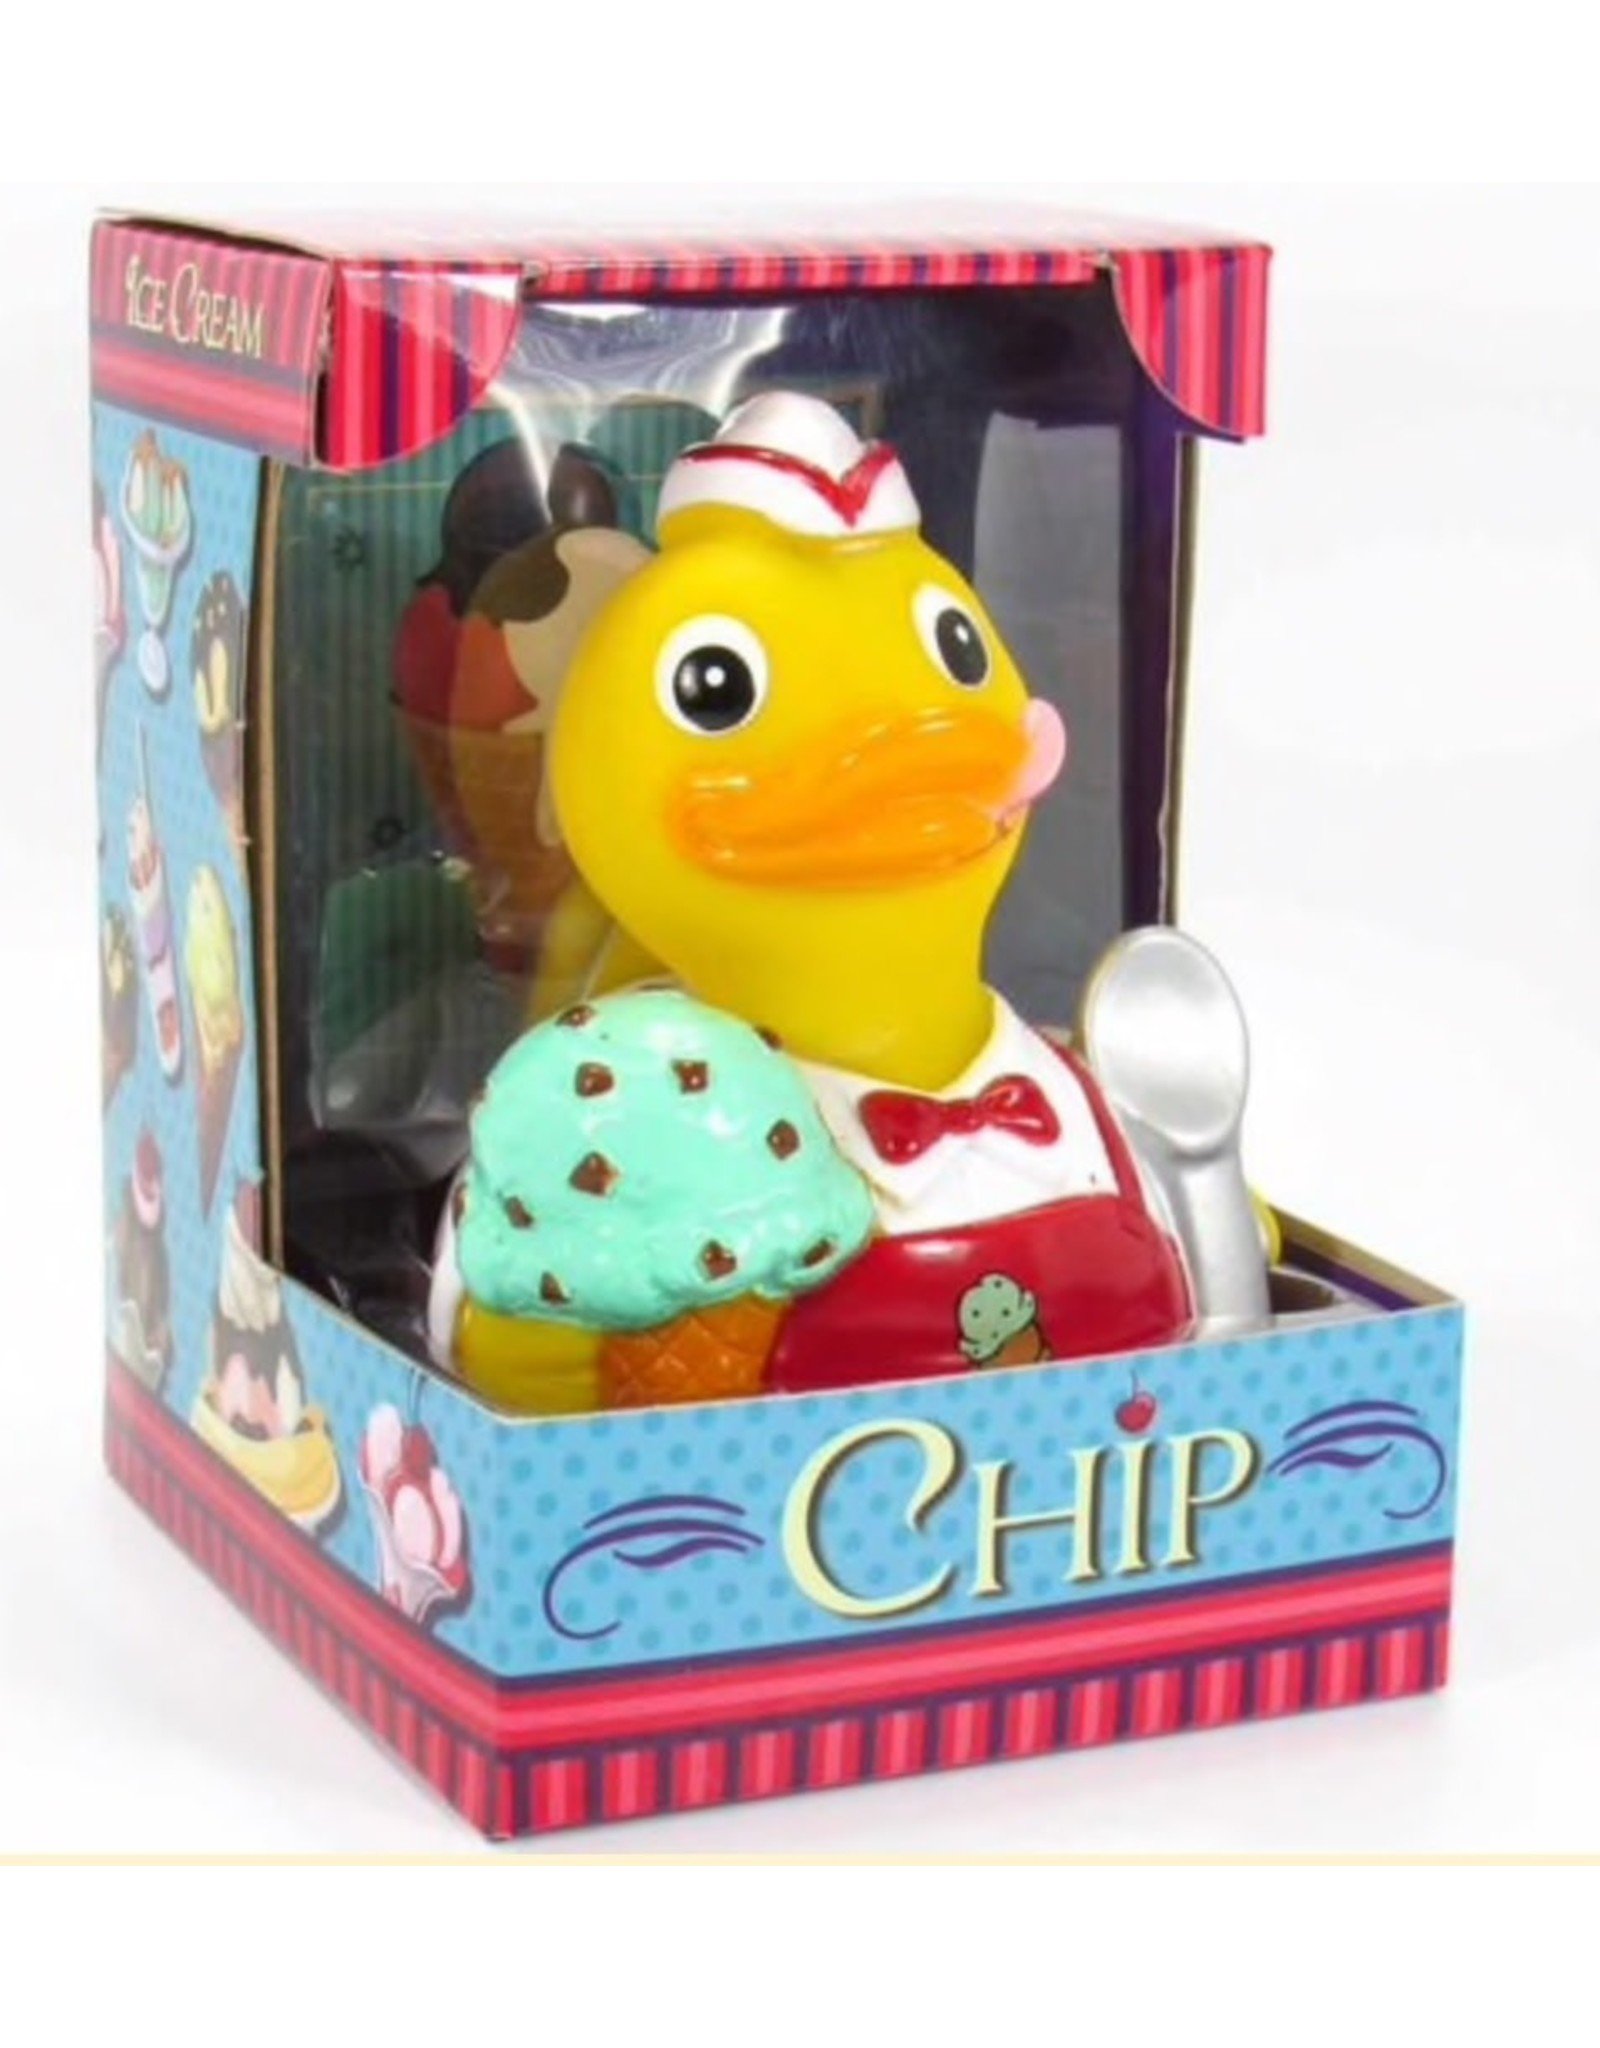 Chip the Ice Cream Rubber Duck